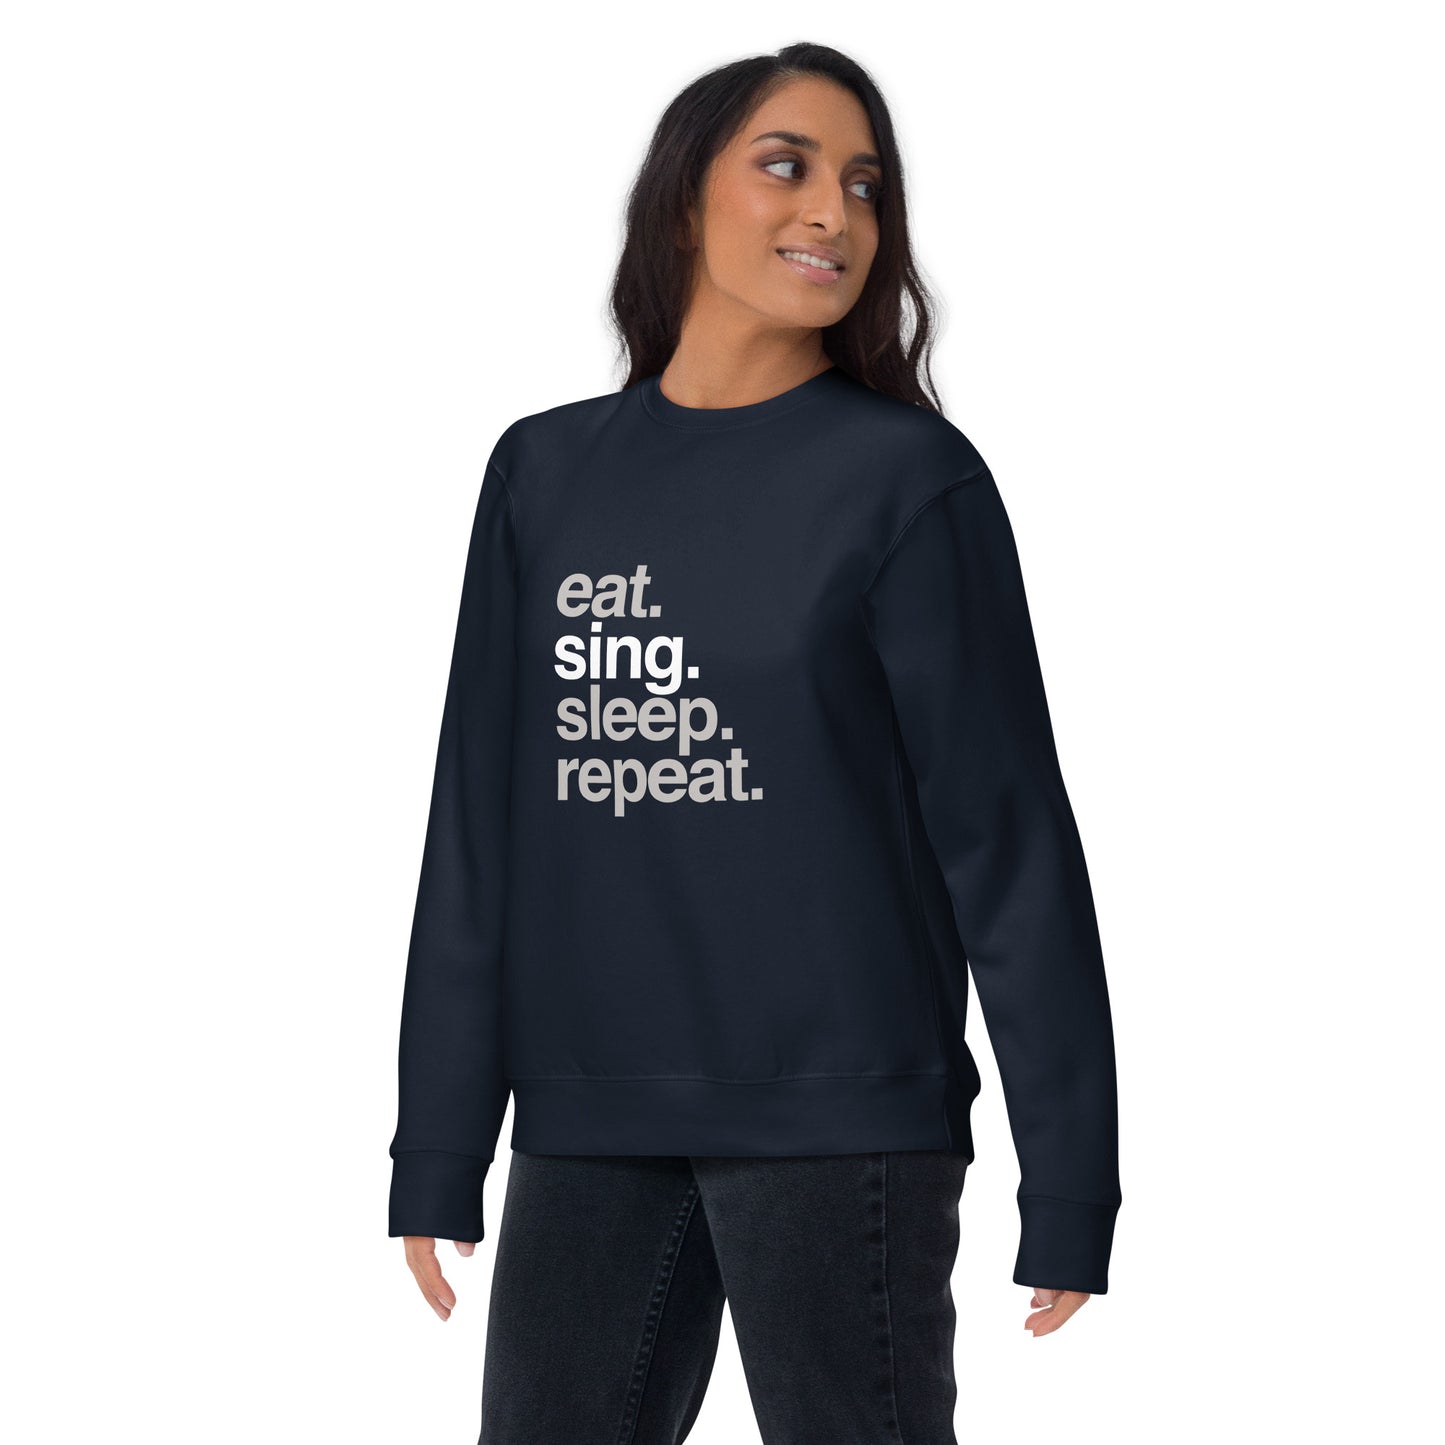 eat sing sleep repeat - Unisex Sweatshirt